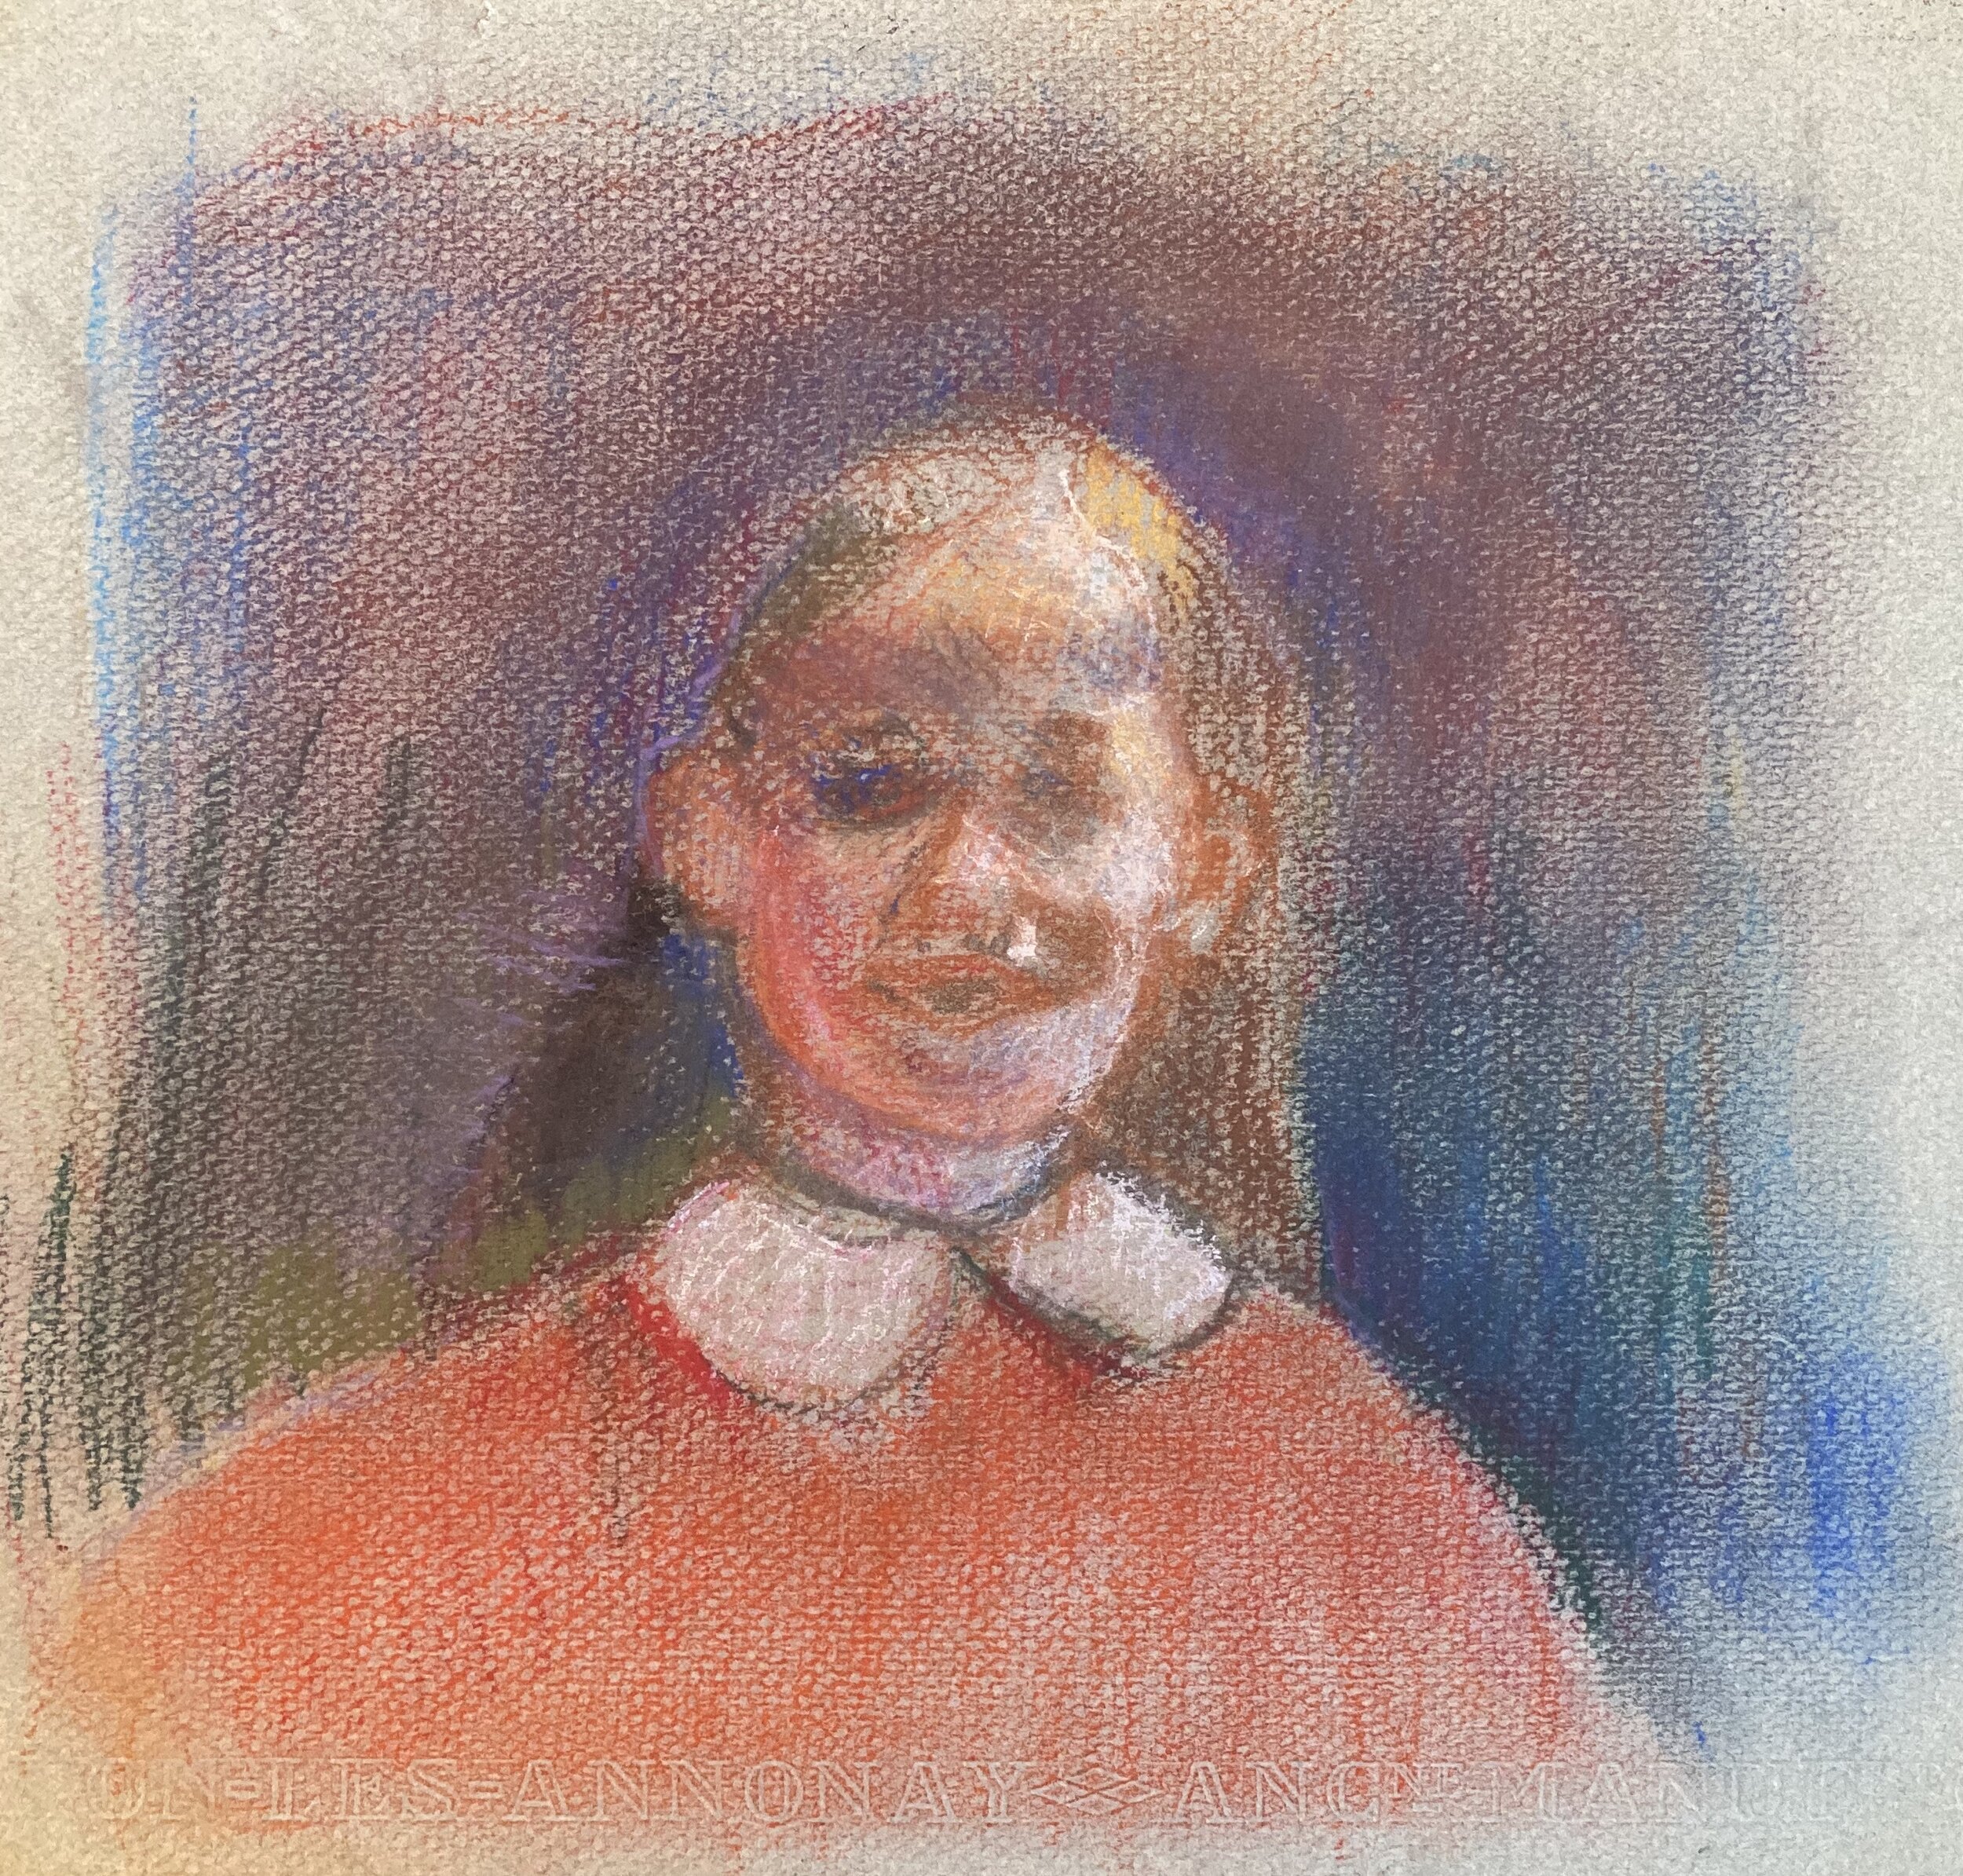   Description:   Portrait of girl   Medium:   Pastel on paper   Dimensions:    H: 10 in   W: 11 in 